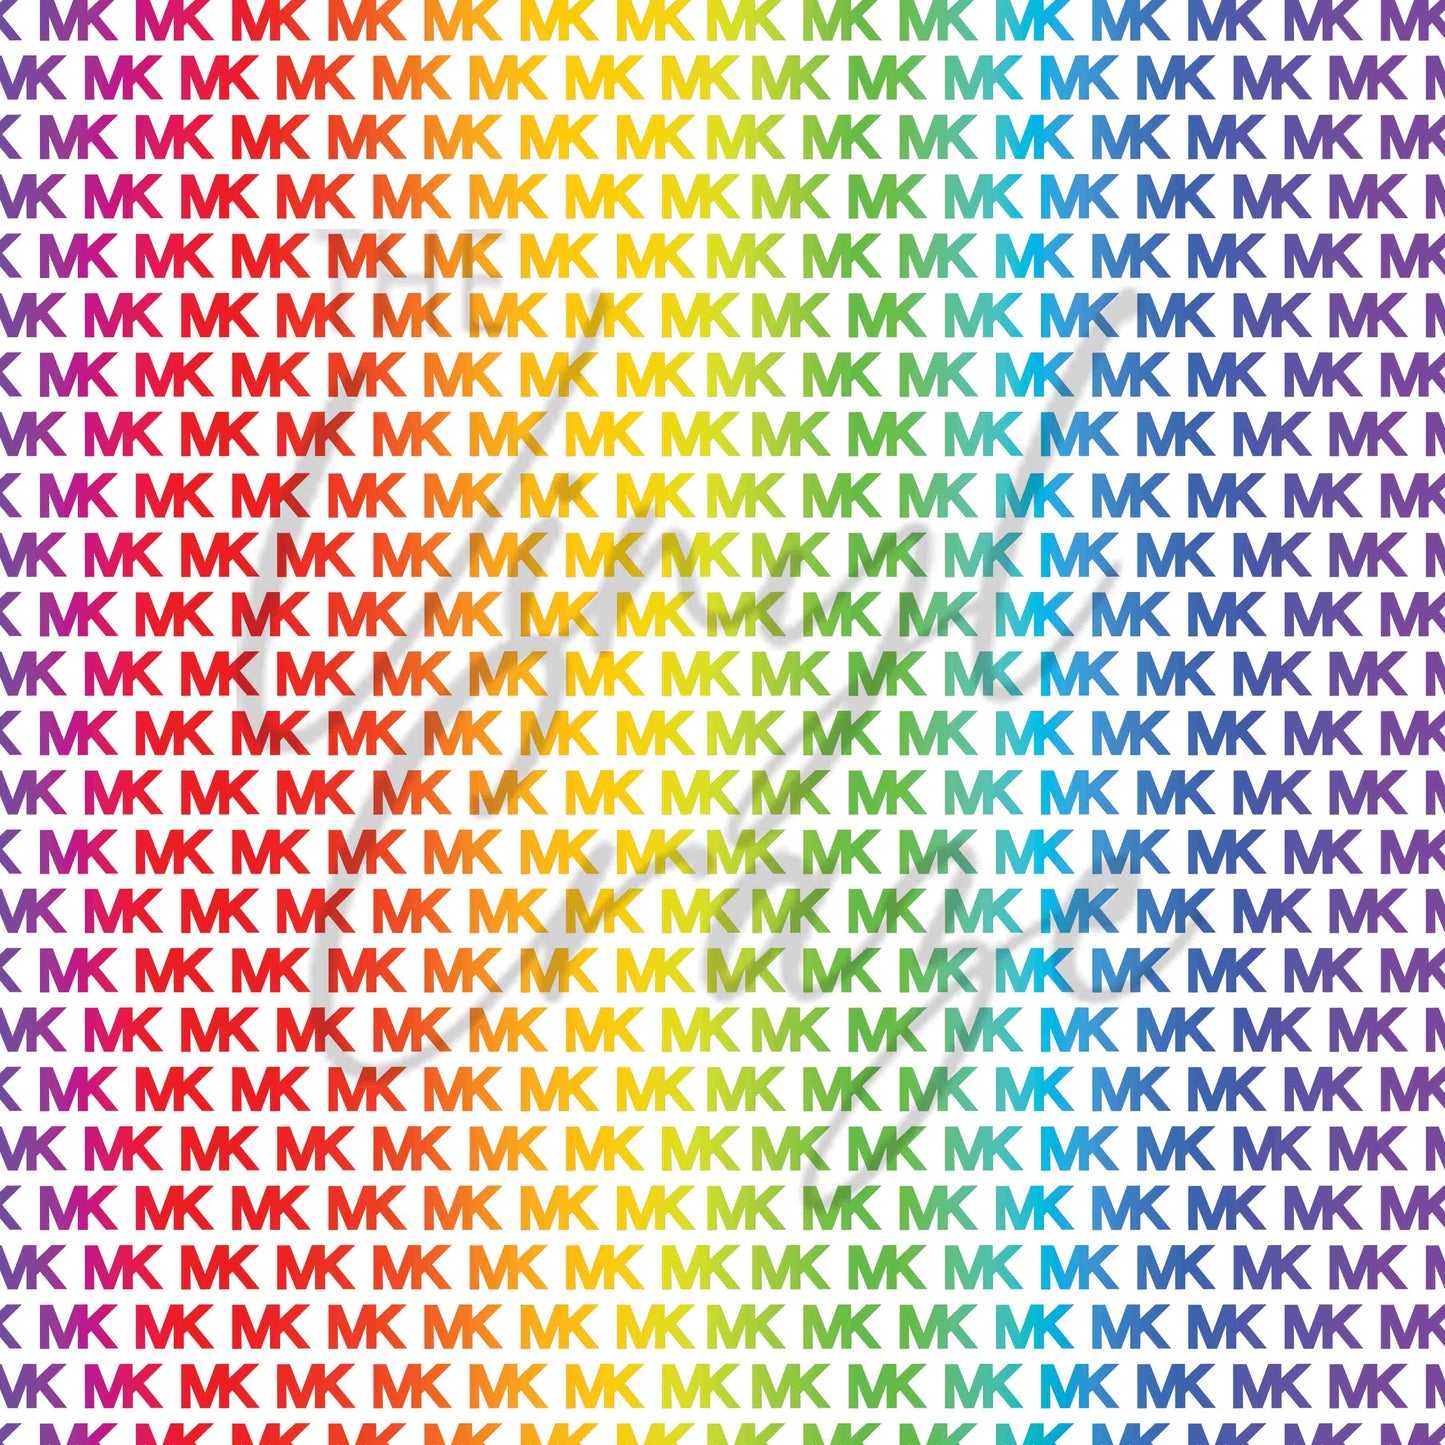 Rainbow K No Logo - Adhesive Vinyl